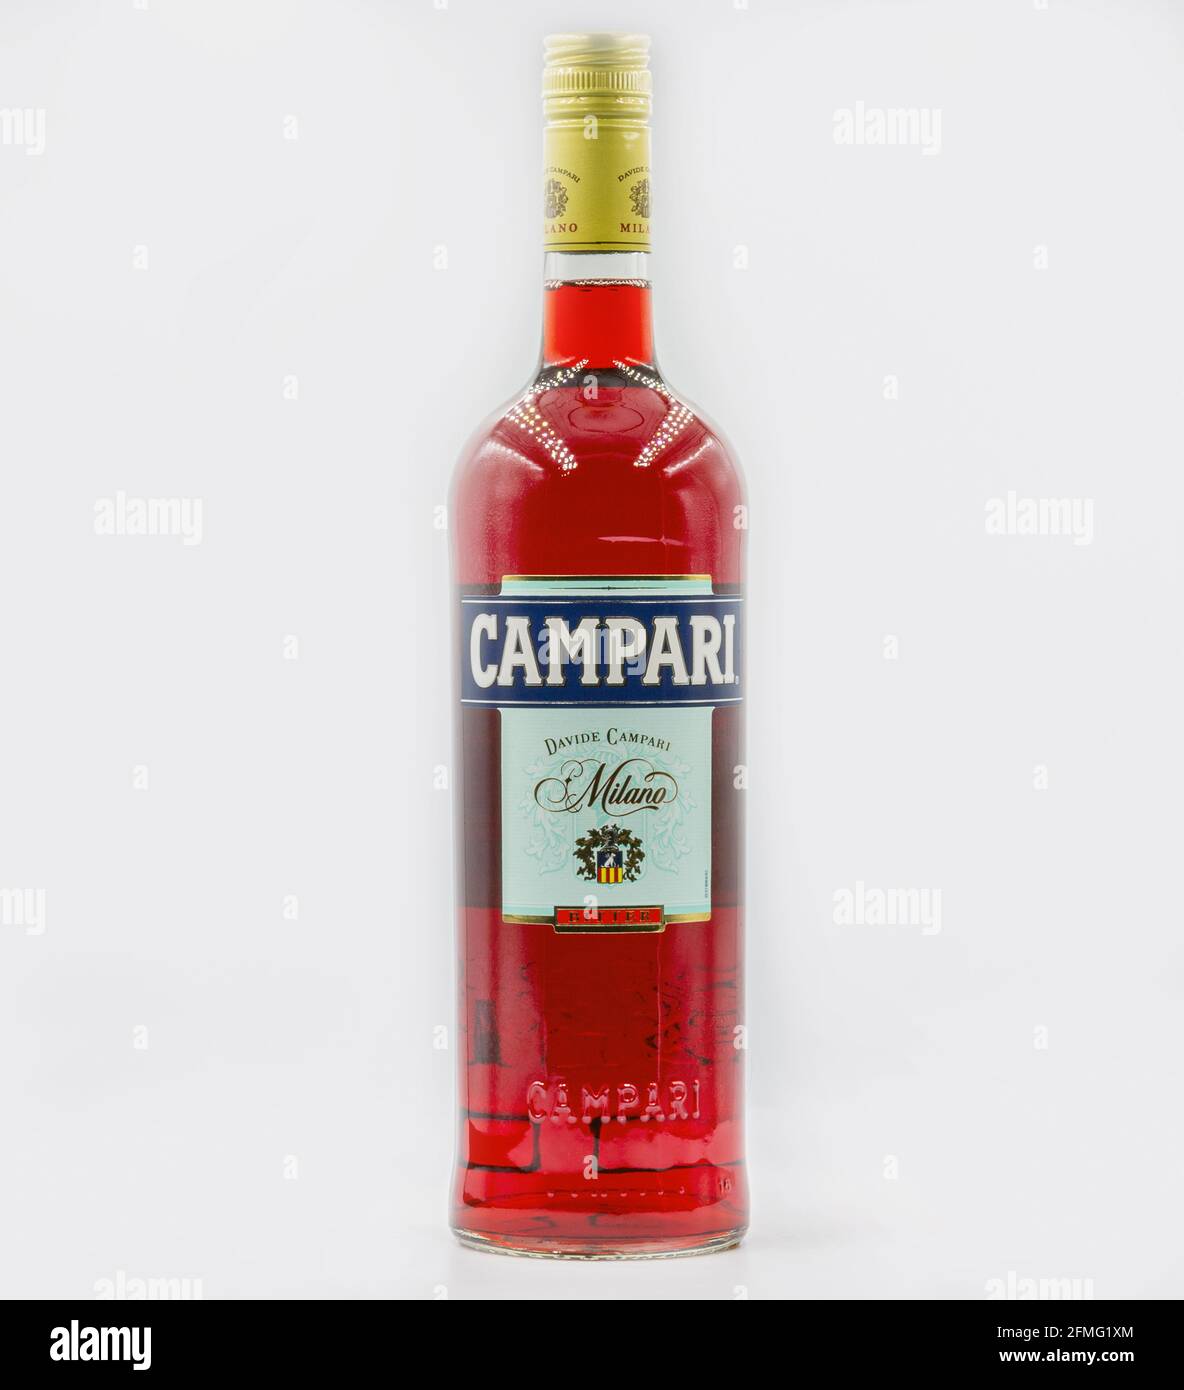 KYIV, UKRAINE - FEBRUARY 20, 2021: Bottle of Campari Bitter Liqueur closeup against white. Classic Italian bitter liqueur is made using a blend of her Stock Photo